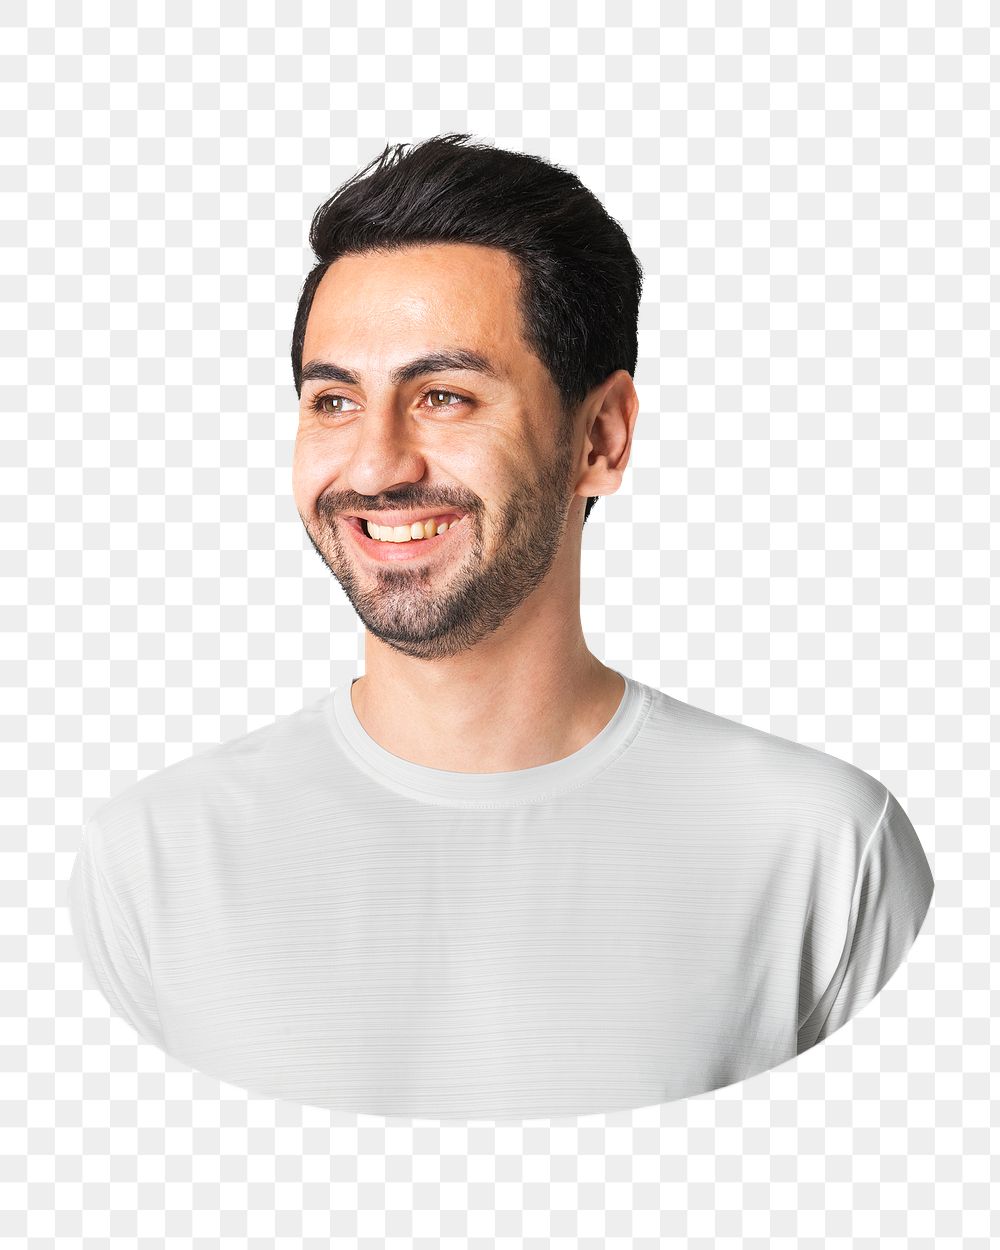 Png man white t-shirt smiling, transparent background